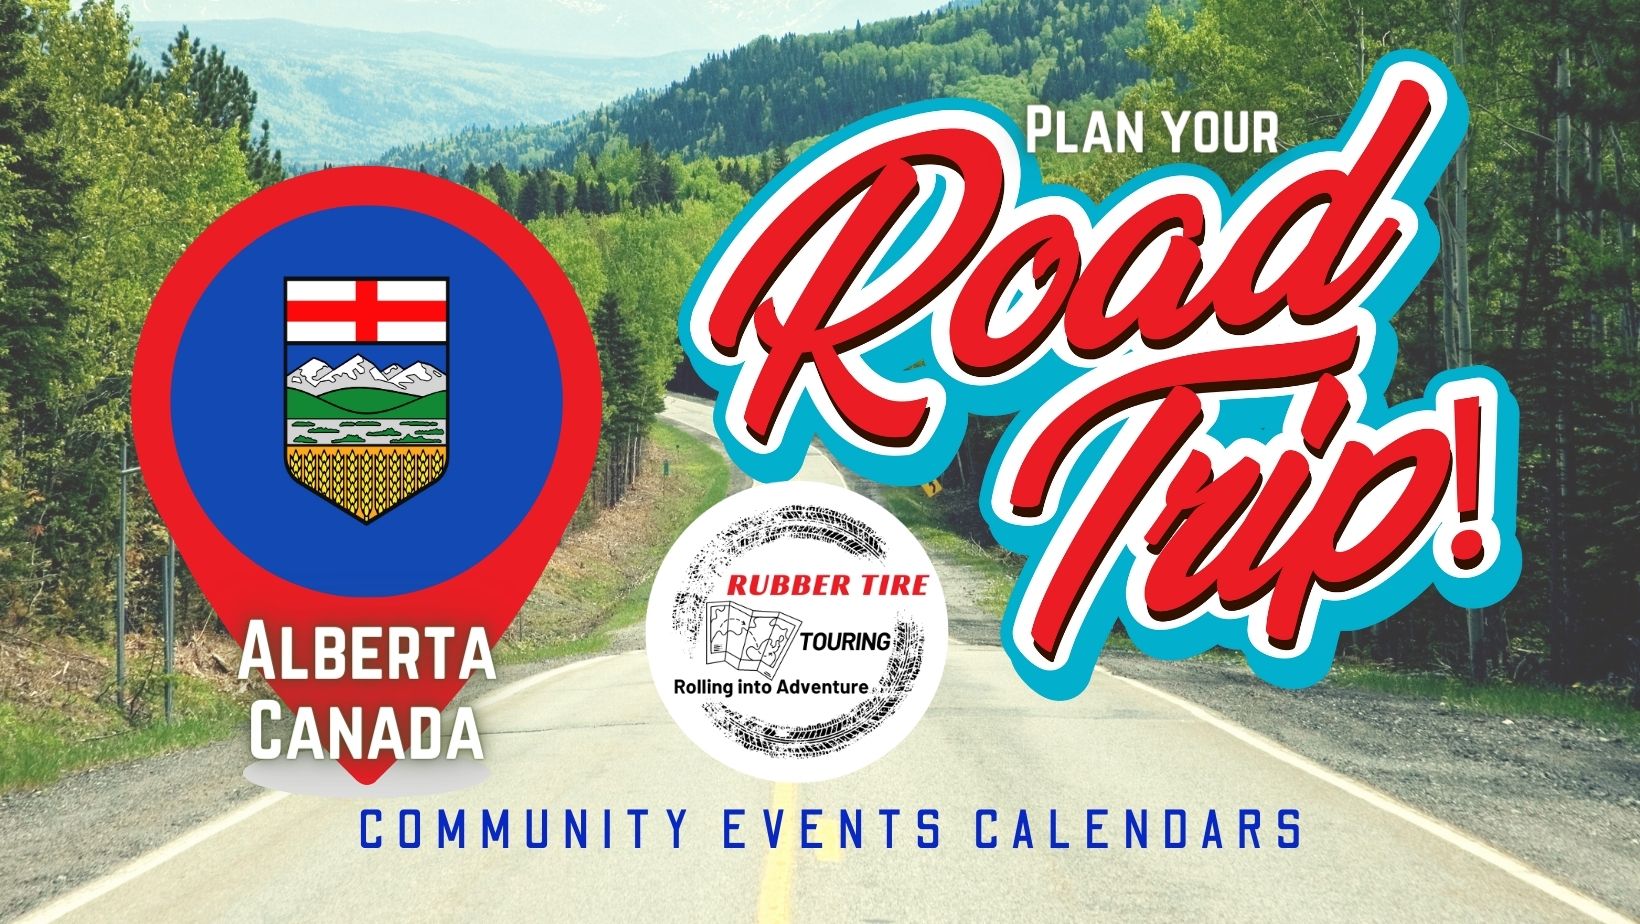 AB Events Calendar - Plan your road trip!